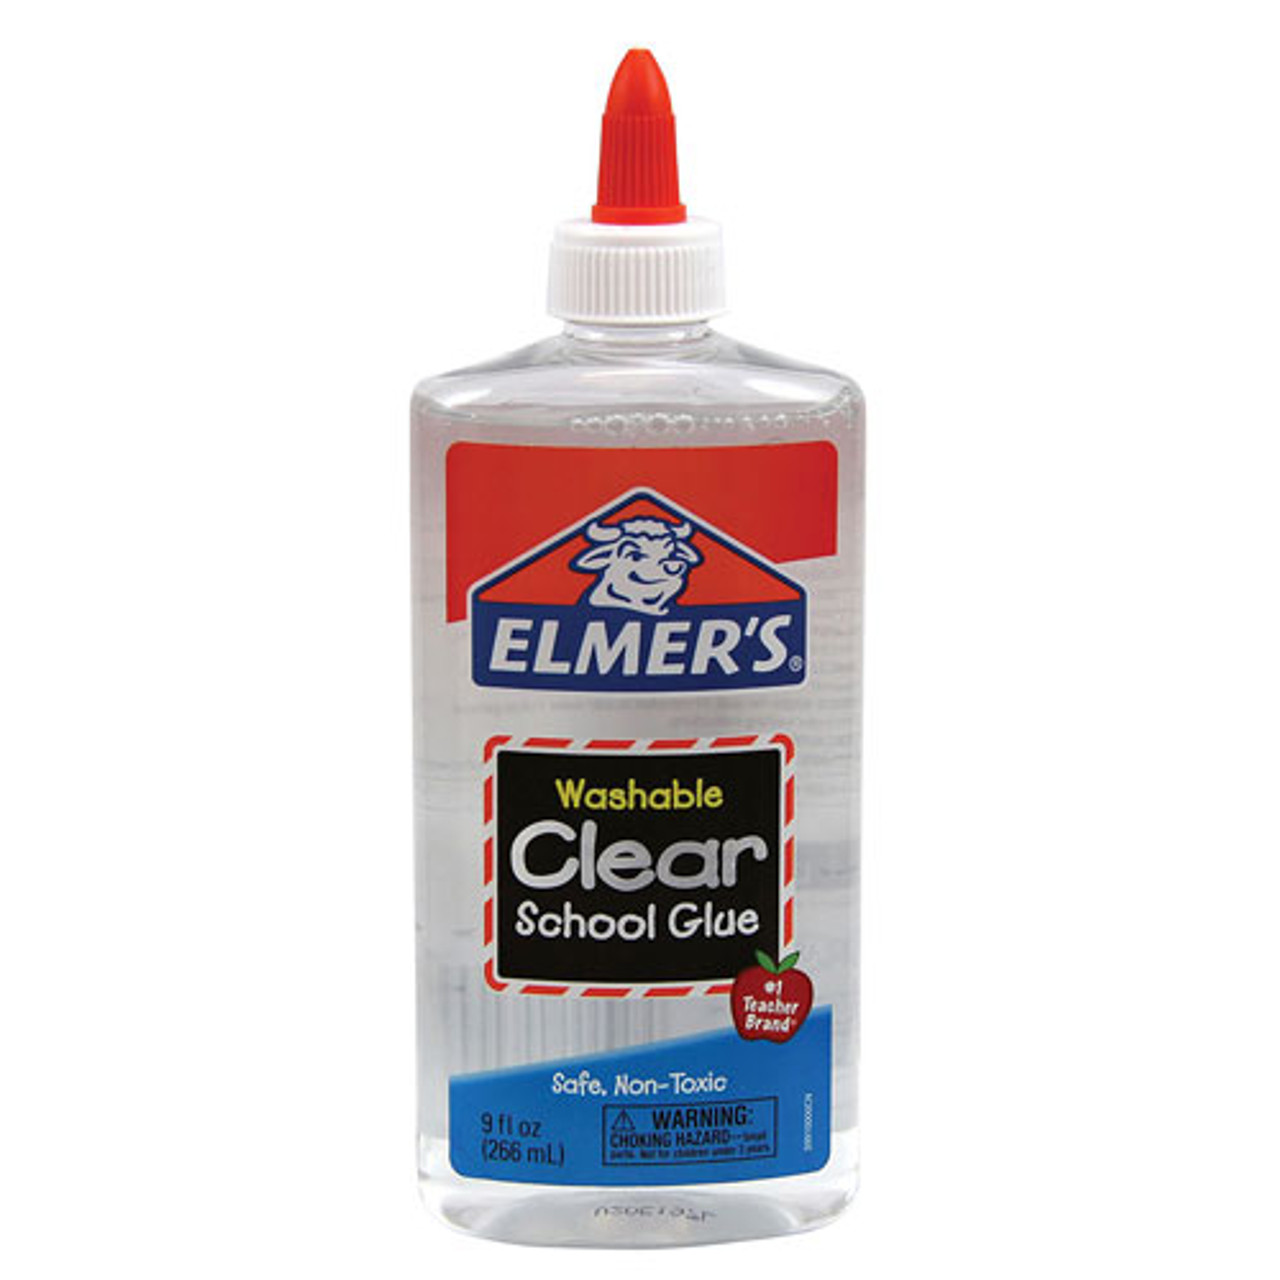 Elmers Glue, Glow in the Dark - 5 fl oz